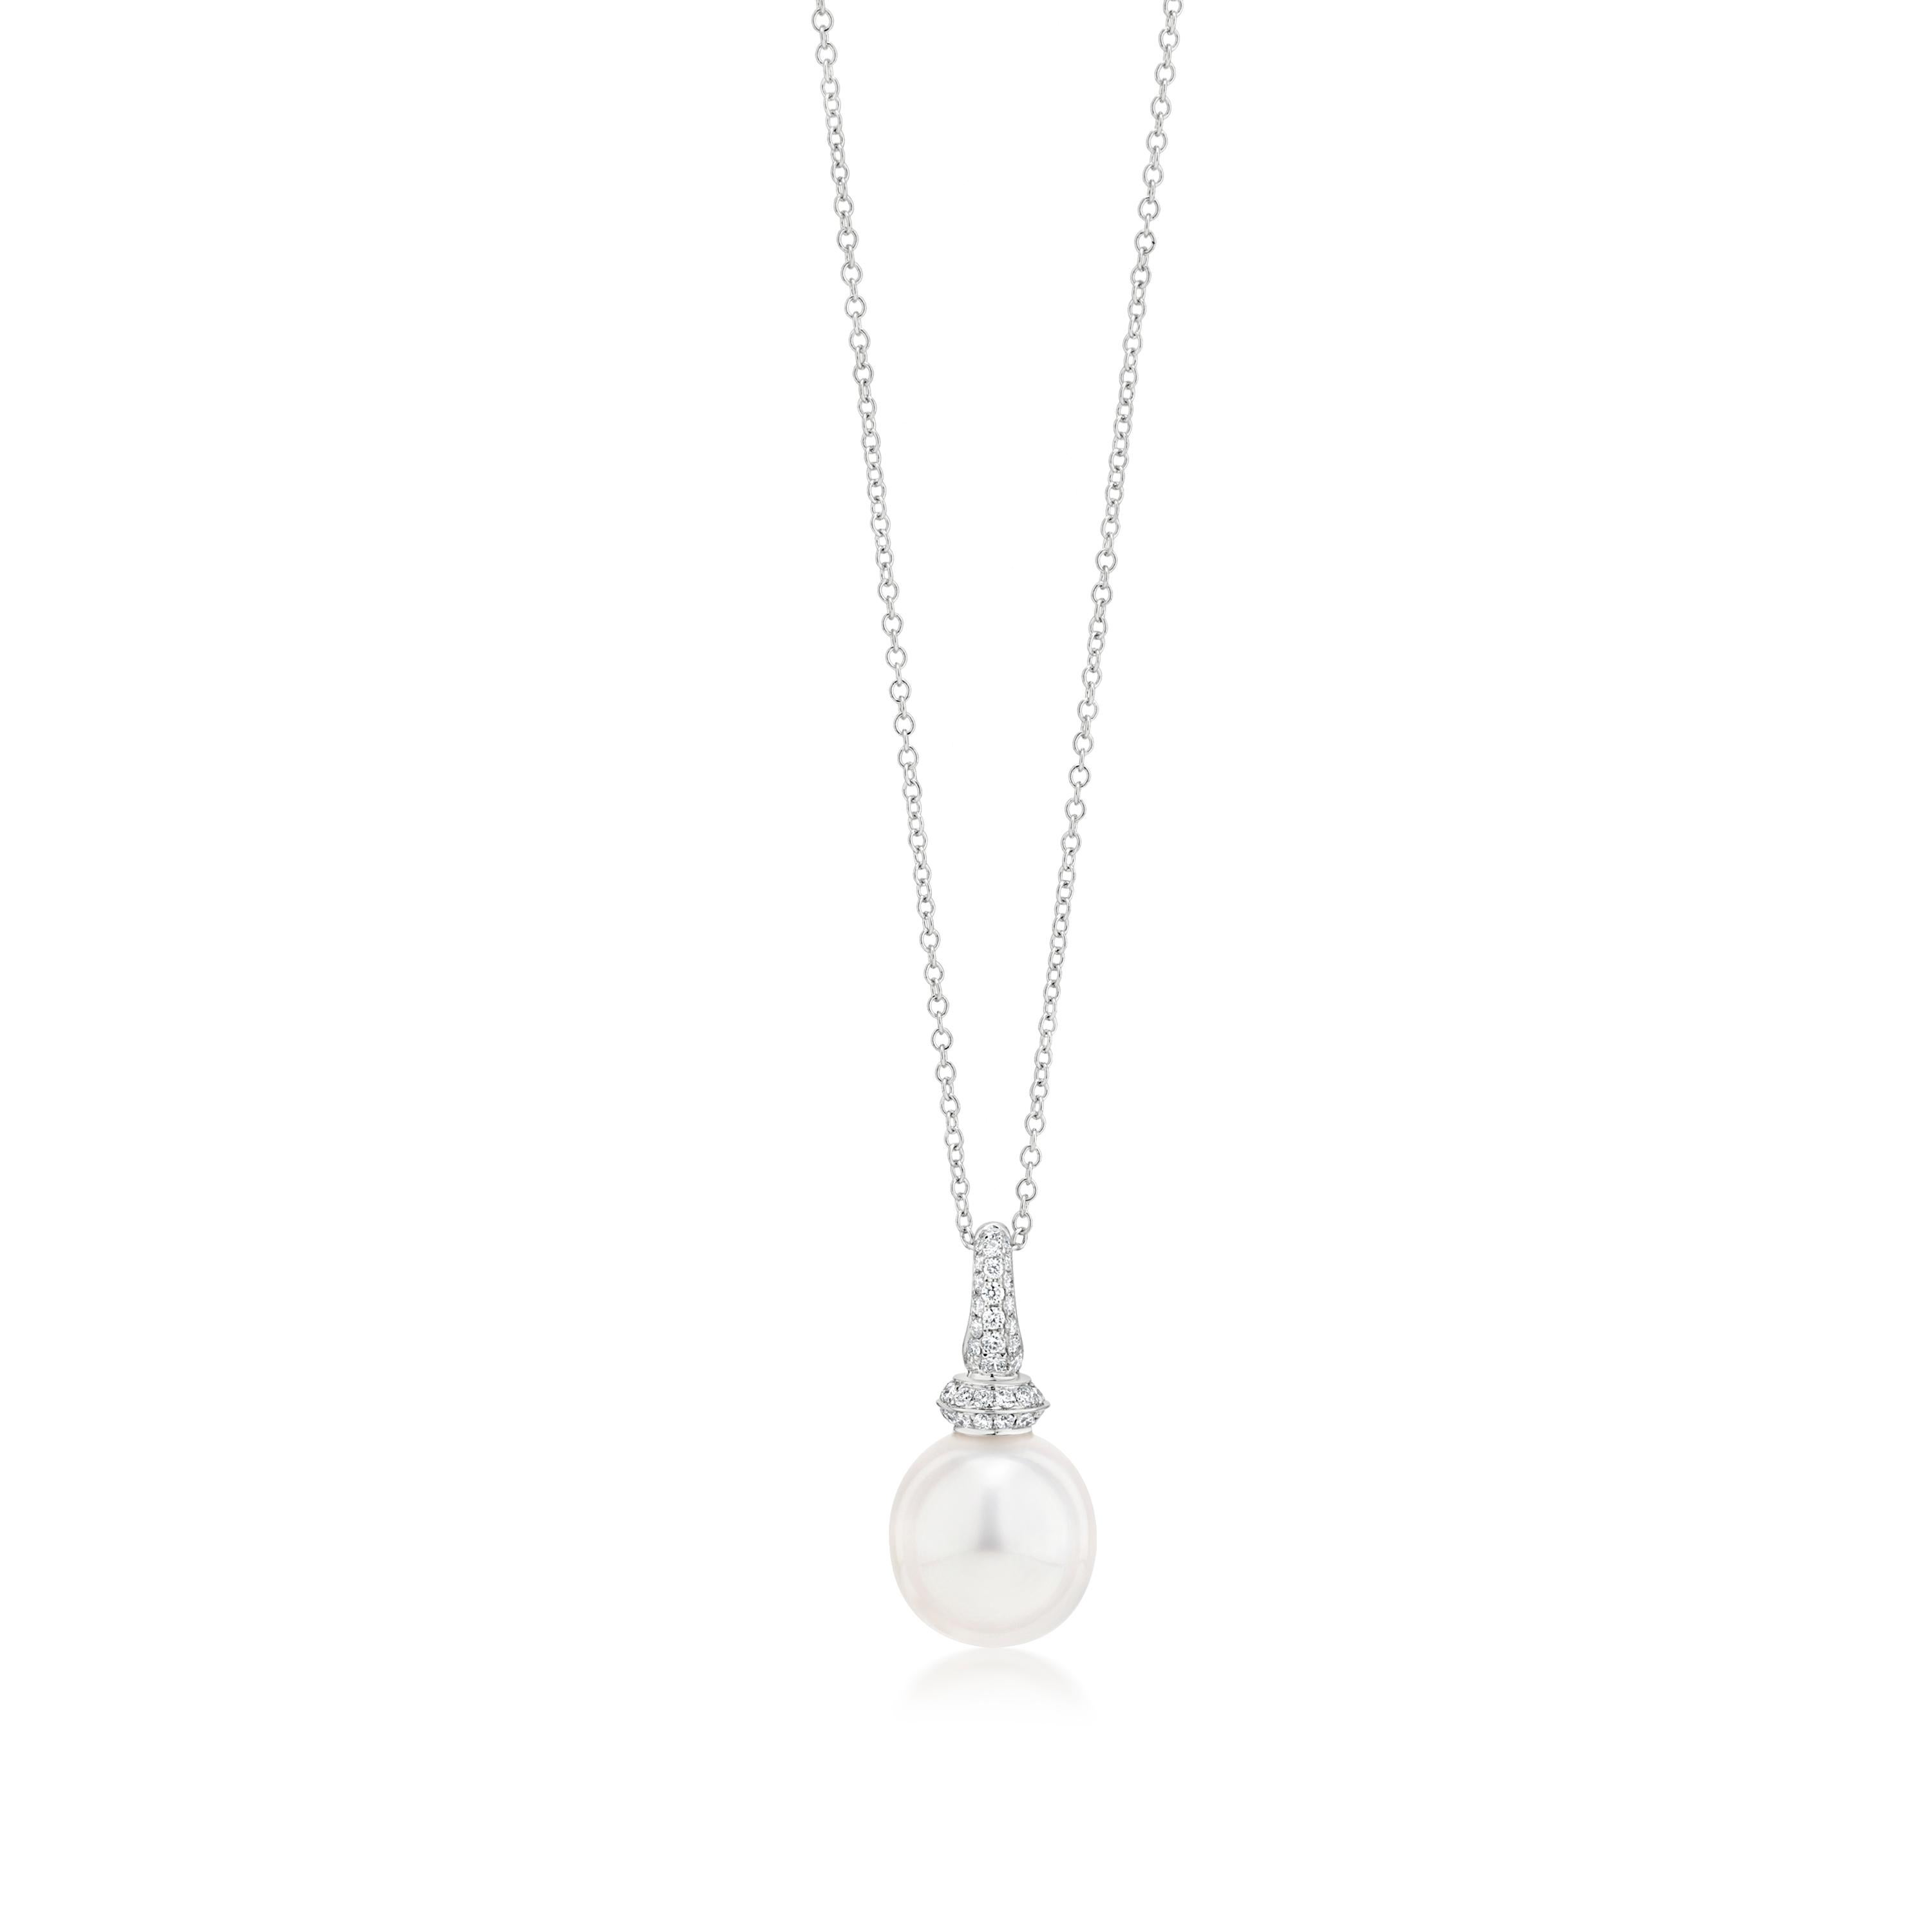 Brilliant Cut Luxle South Sea Pearl and Diamond Drop Pendant Necklace in 18k White Gold For Sale